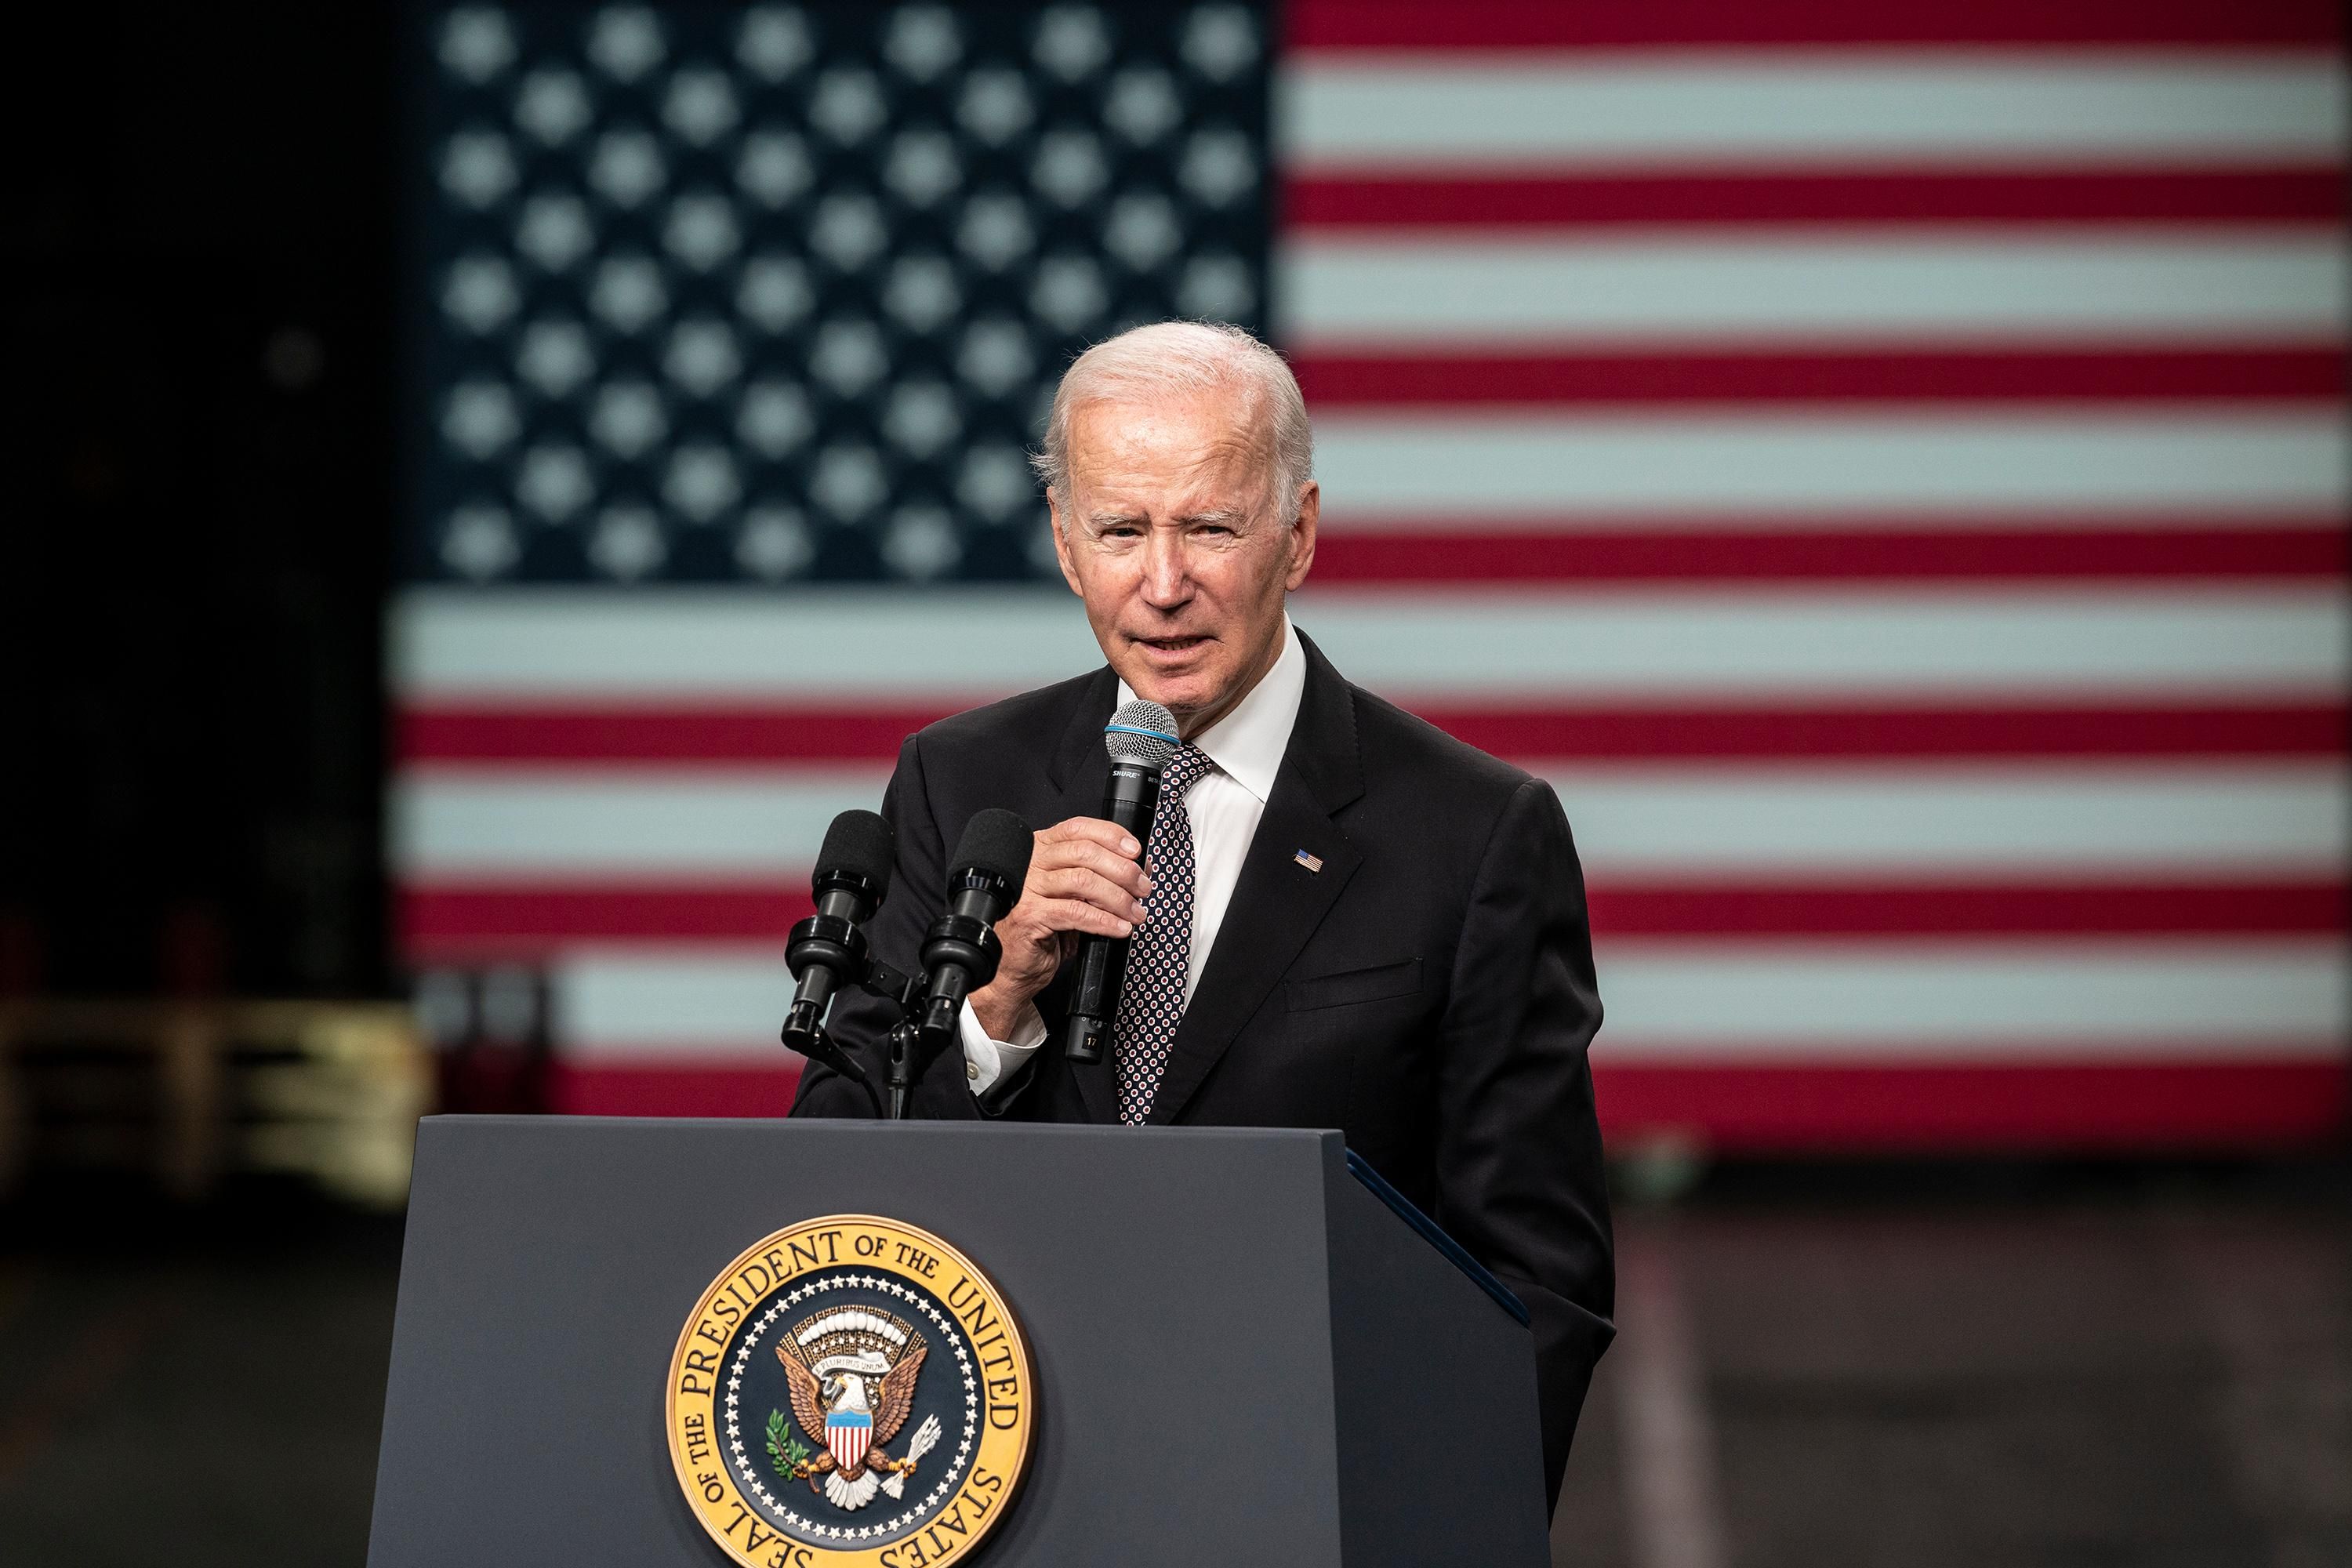 President Joe Biden delivers a speech at an IBM facility